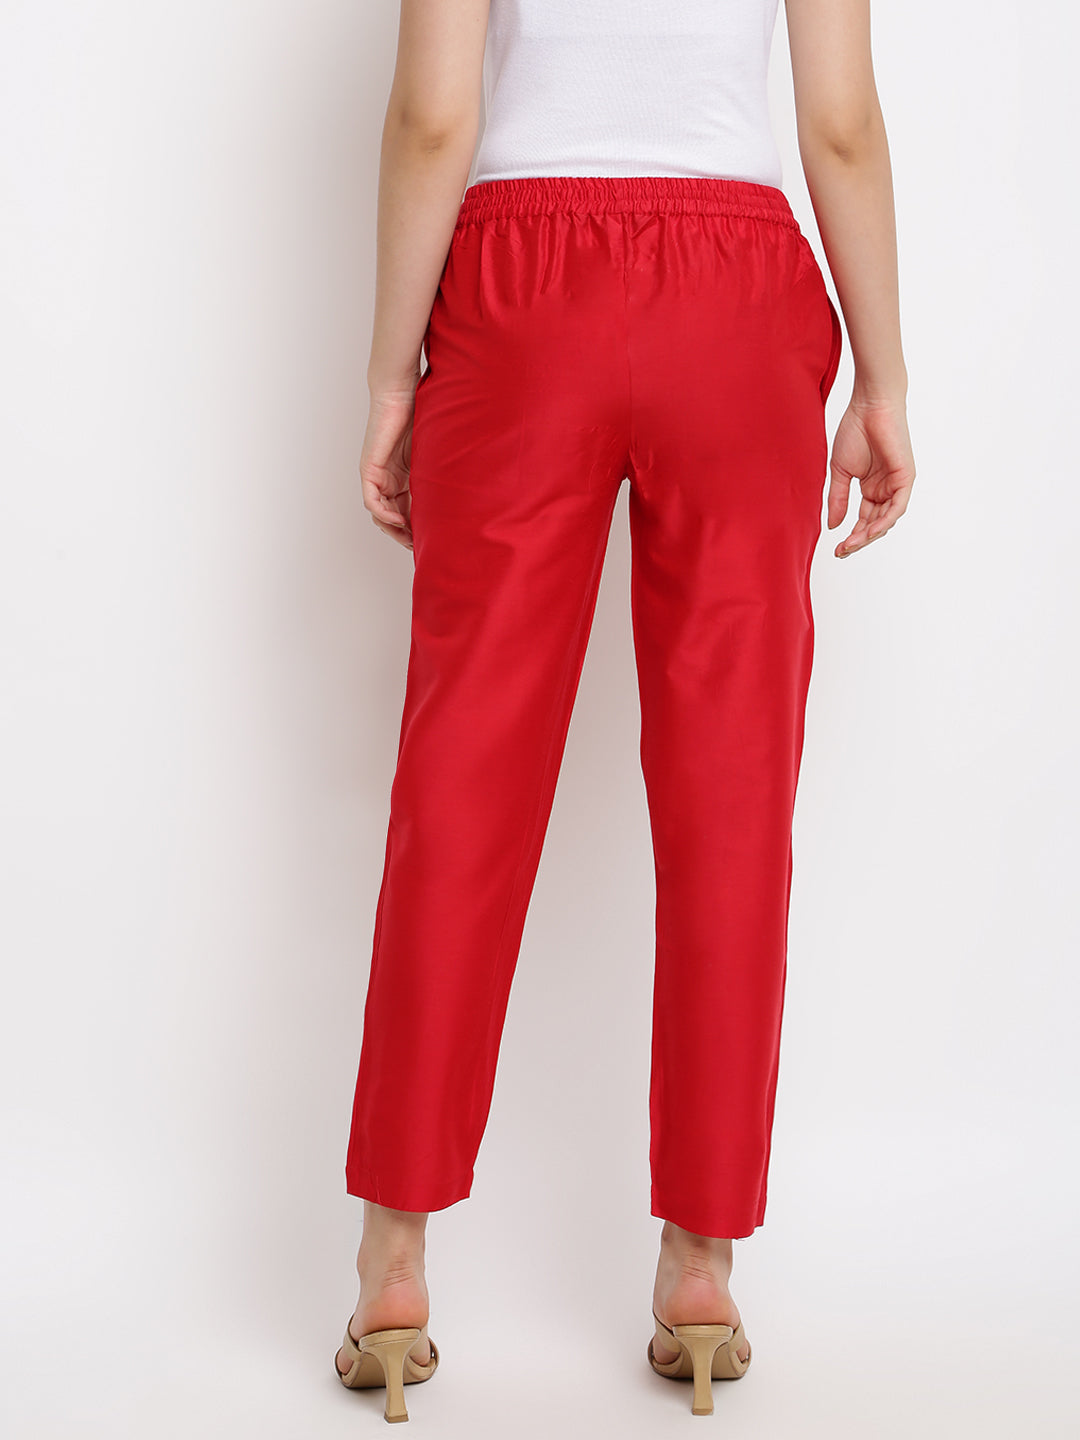 Women's Red Solid Straight Pants - IMARA